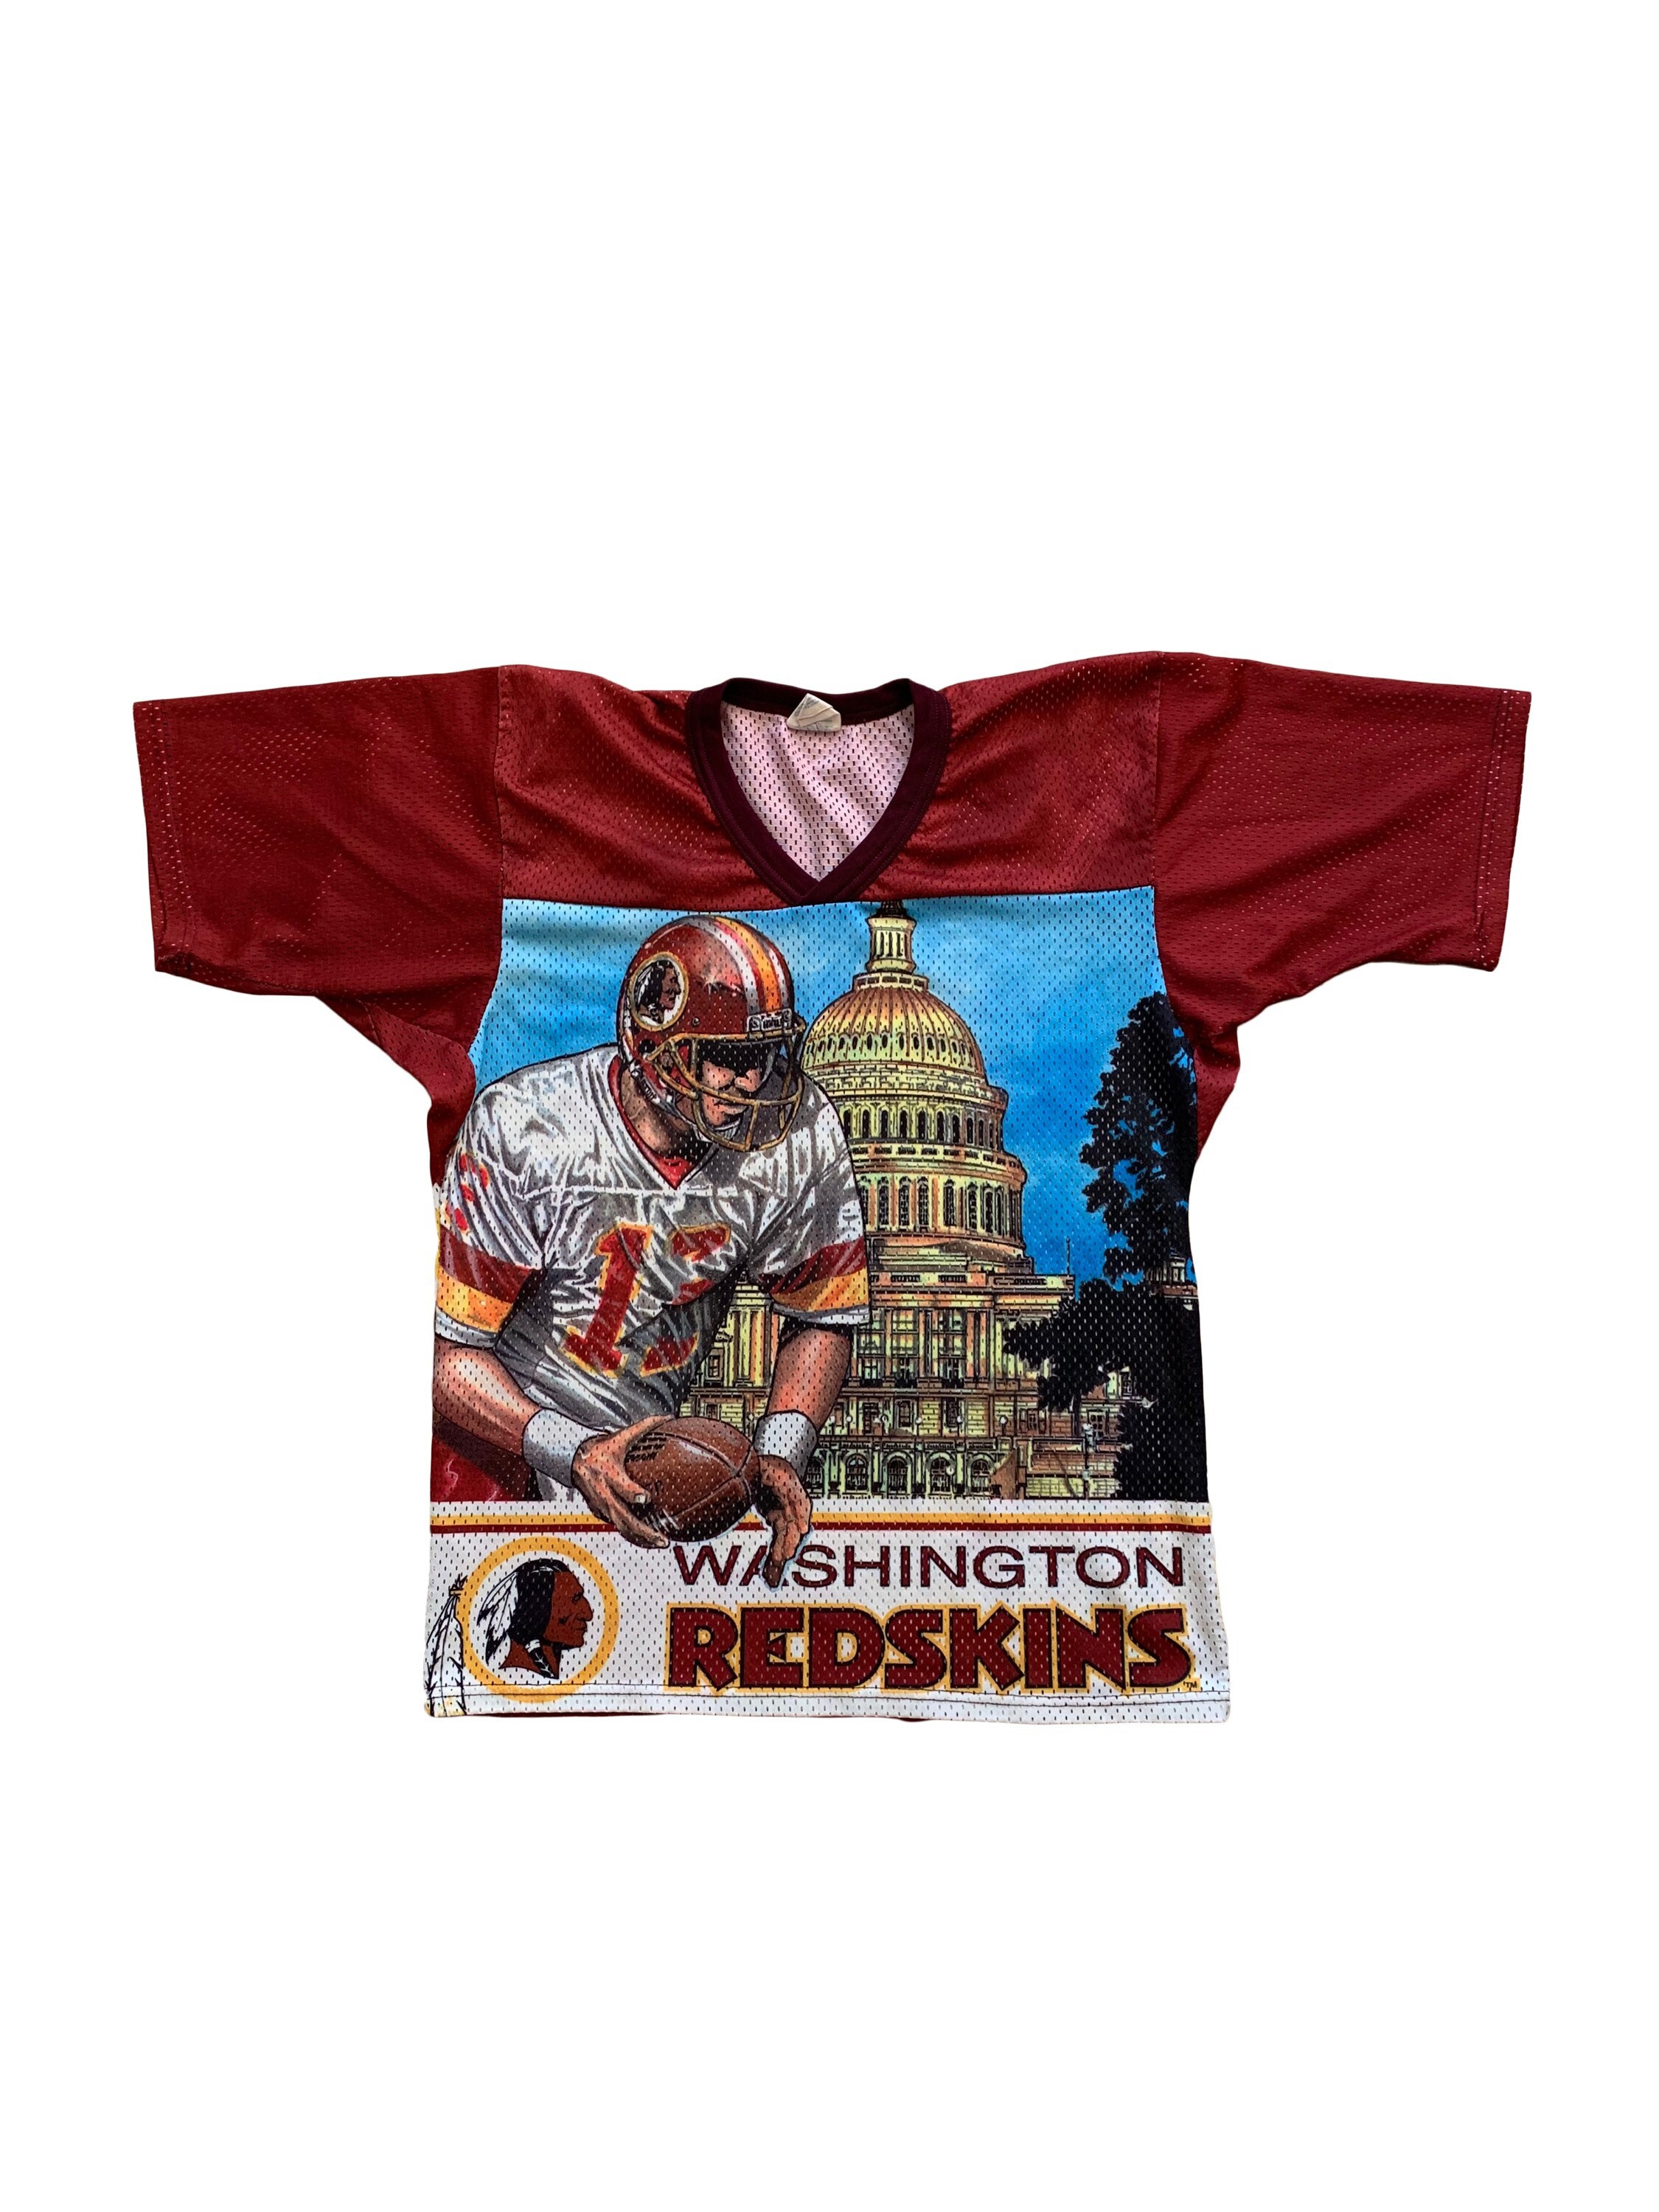 Washington Redskins NFL Retro tecmo bowl jersey shirt